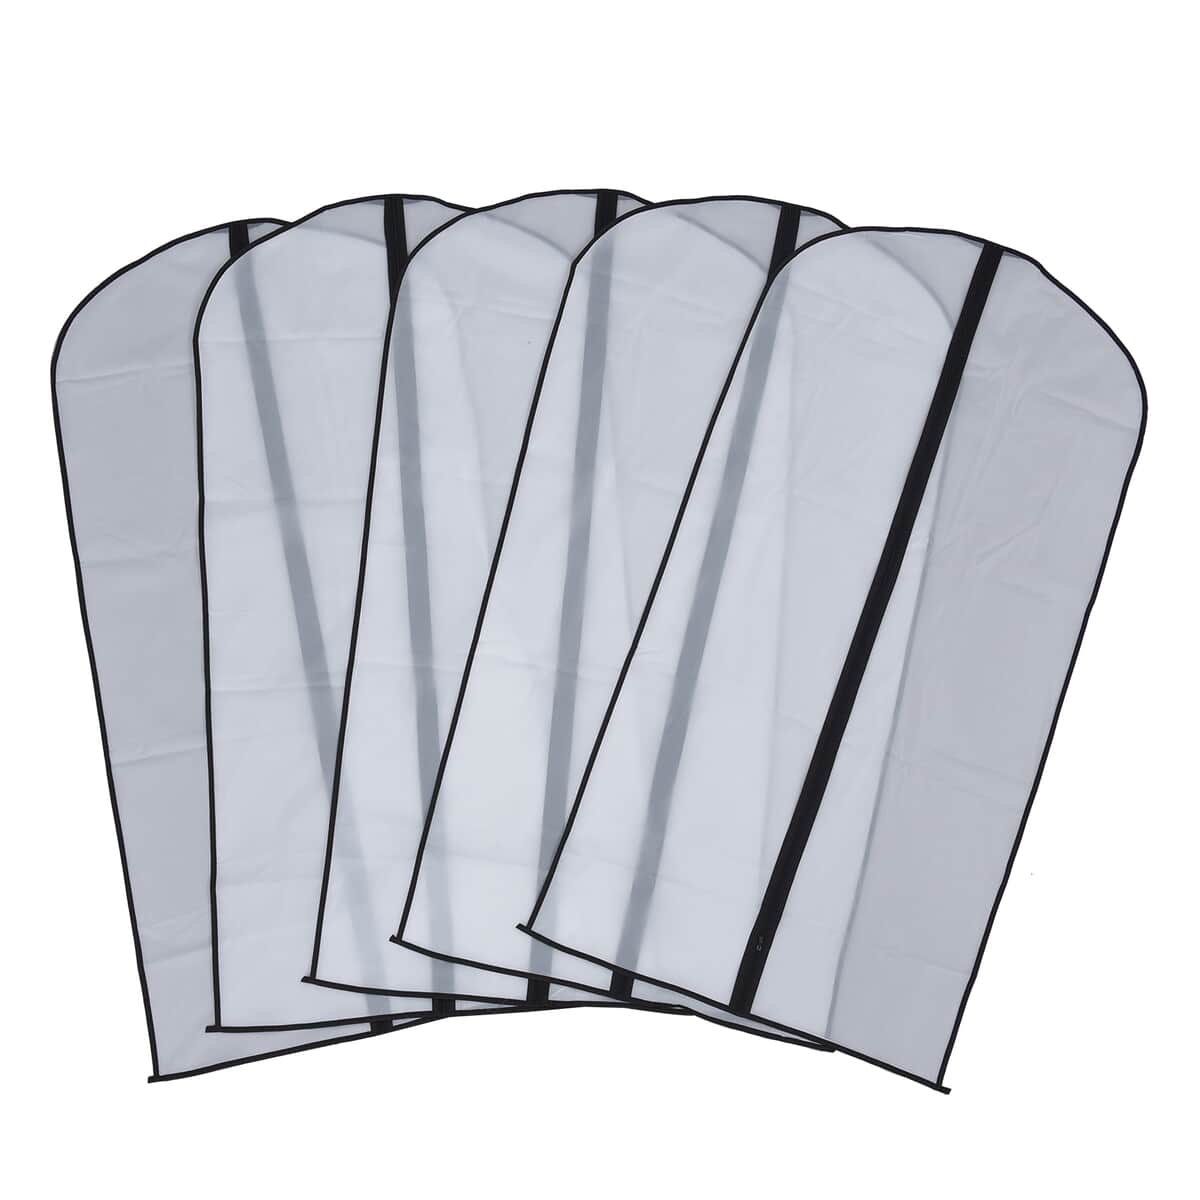 Set of 5 Dustproof Garment Bag with Zipper image number 0